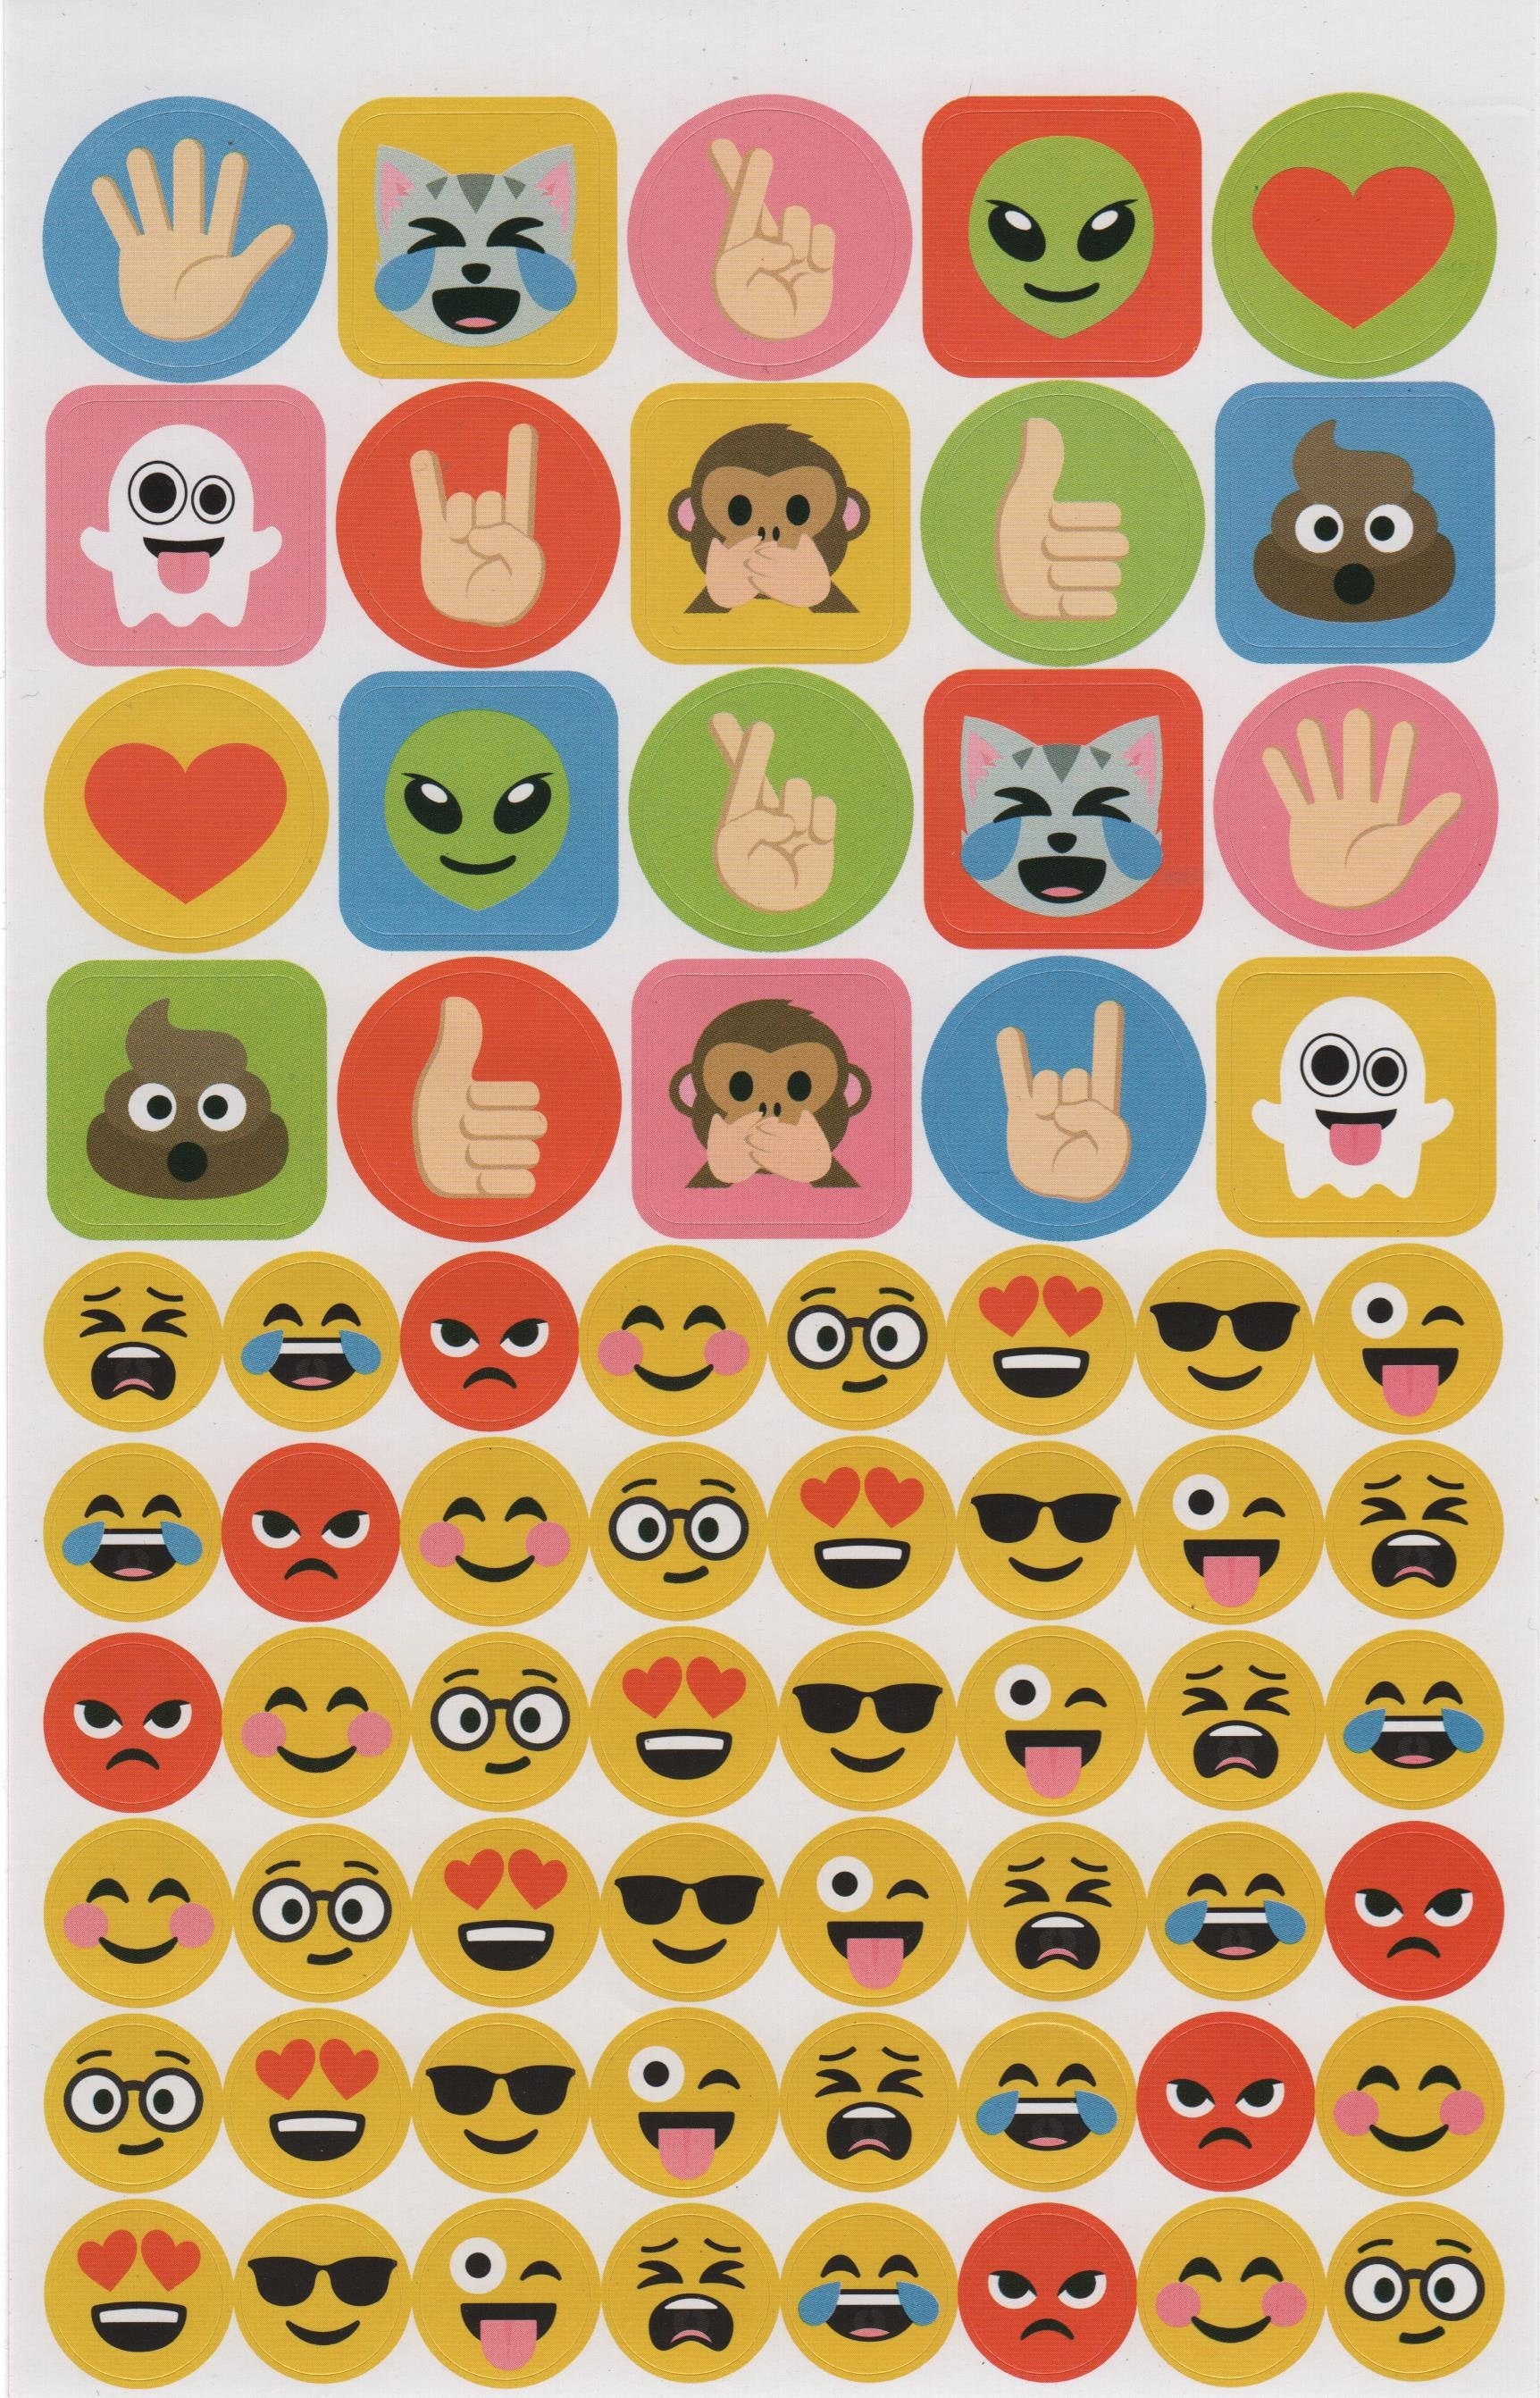 30 Cute Smiley Face Girl Emoji Scrapbook Stickers 1.5 Round